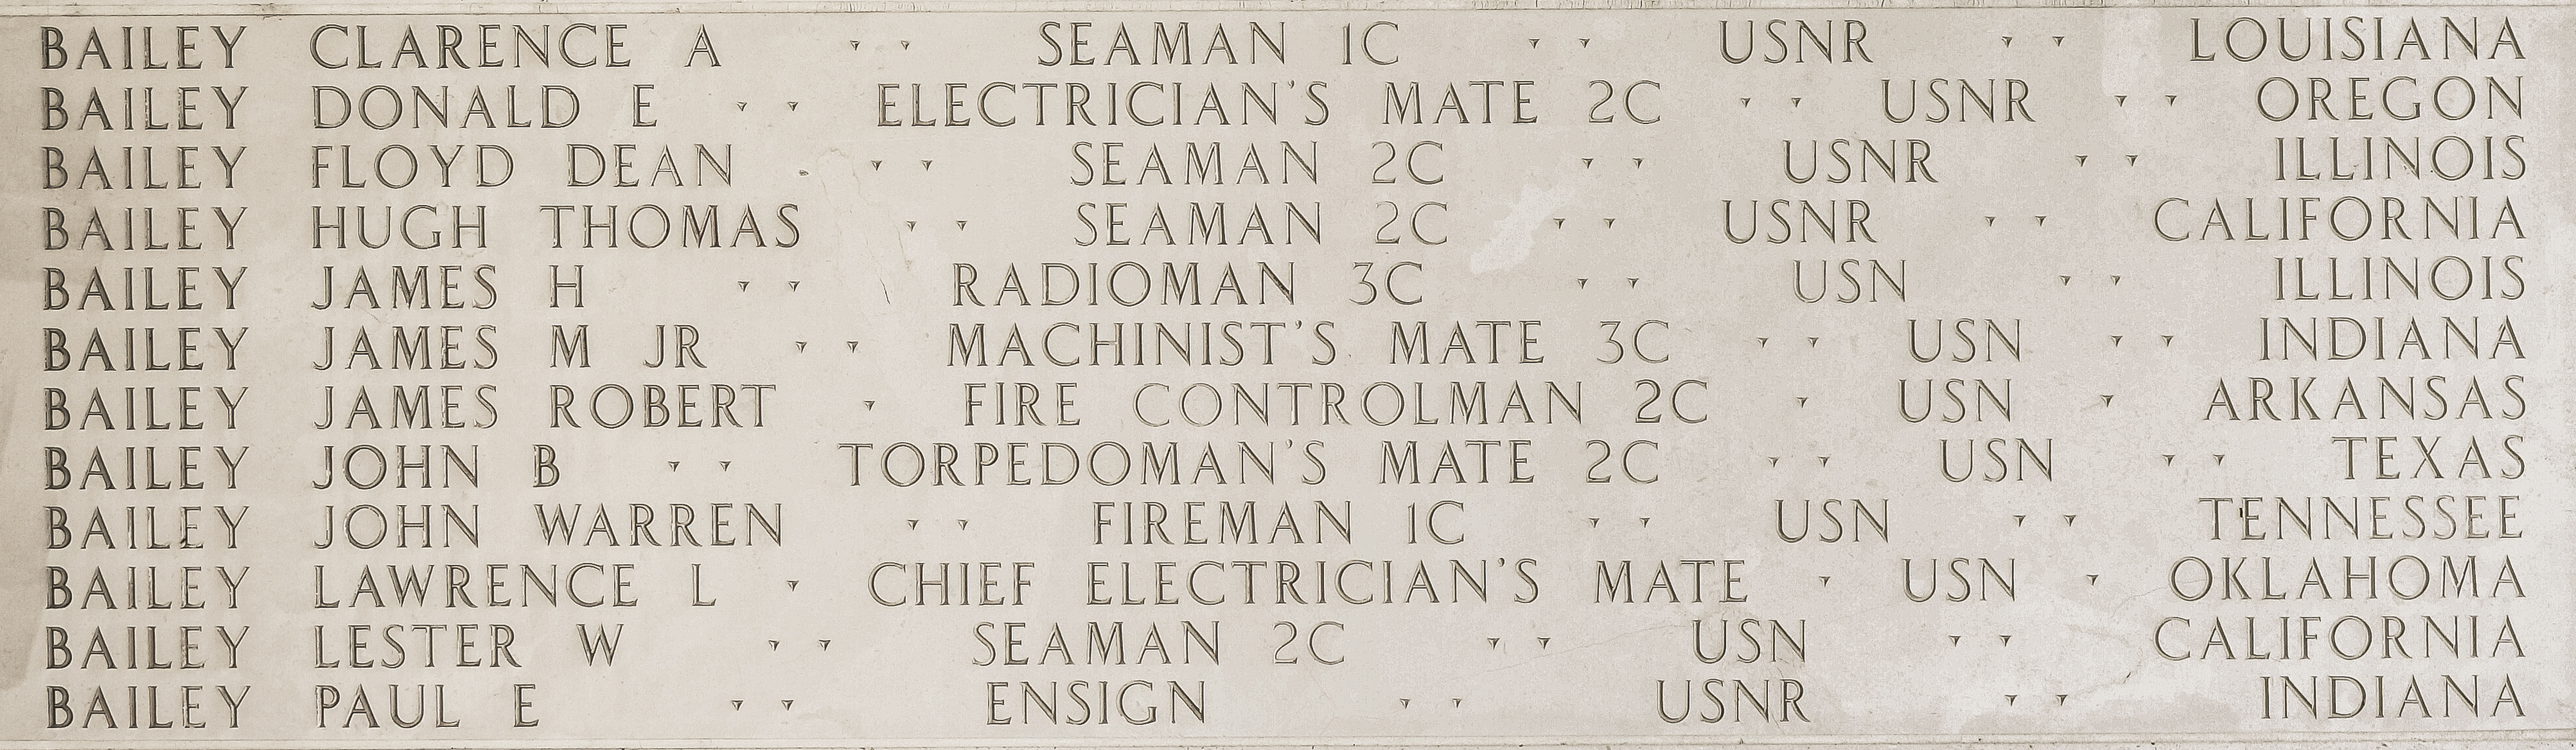 Donald E. Bailey, Electrician's Mate Second Class